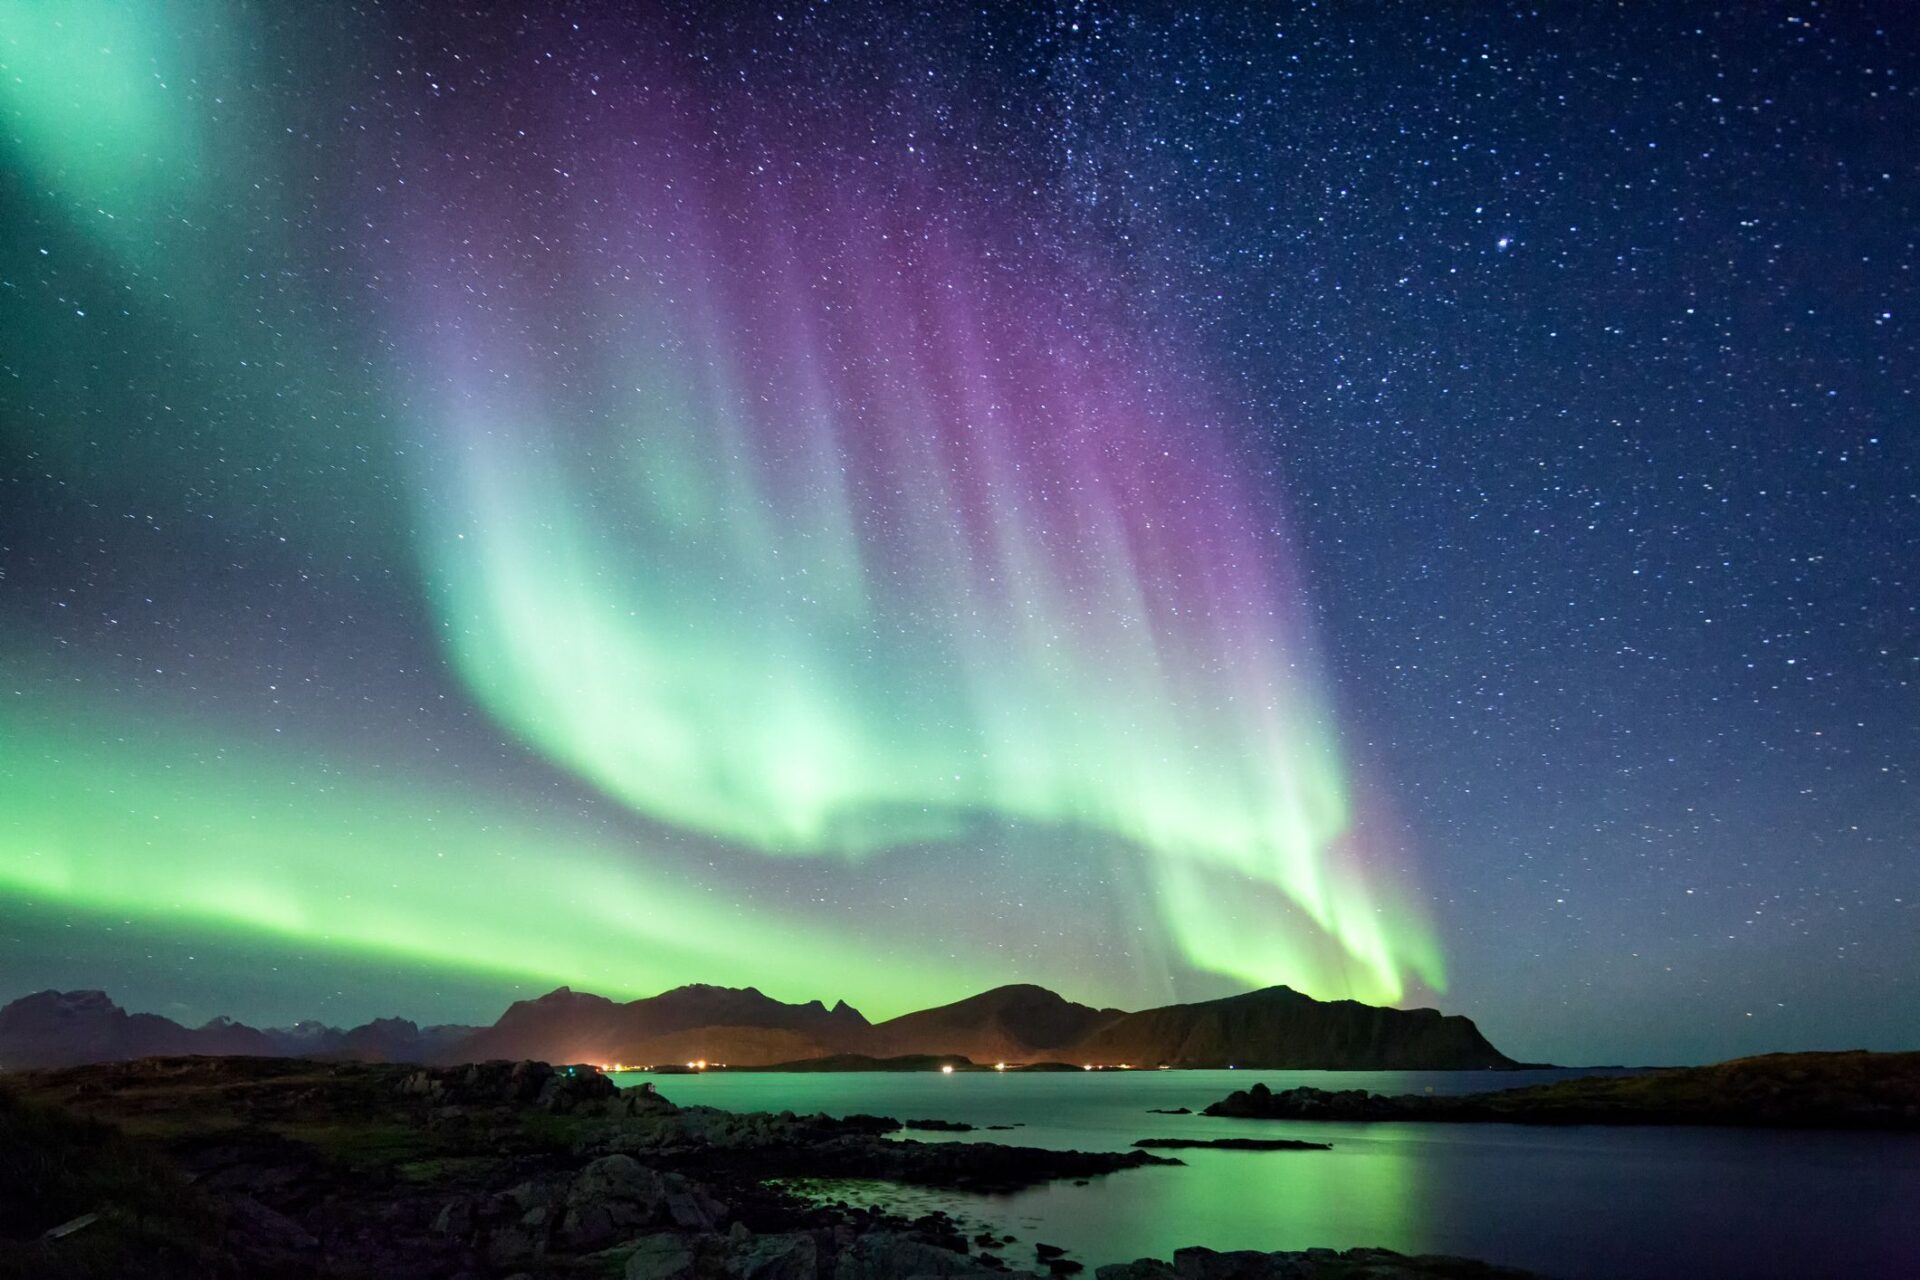 The Northern Lights, Aurora Borealis